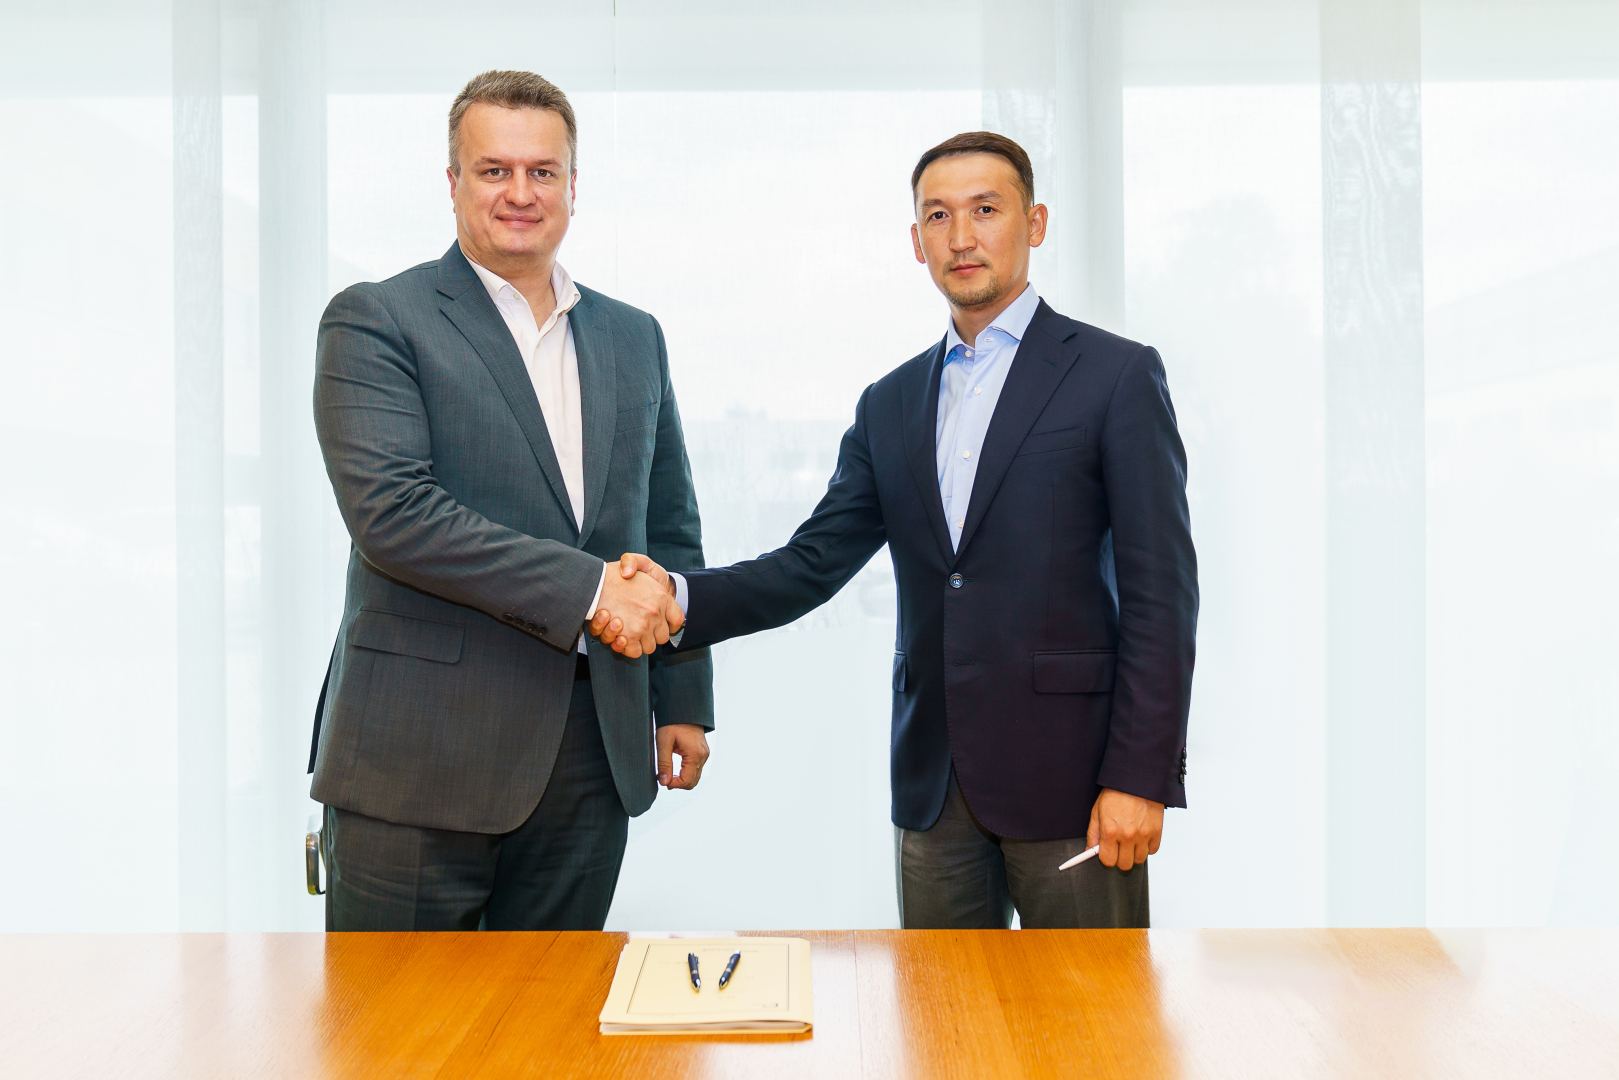 AzerTelecom and Kazakhtelecom established a joint venture within the Trans-Caspian Fiber Optic project